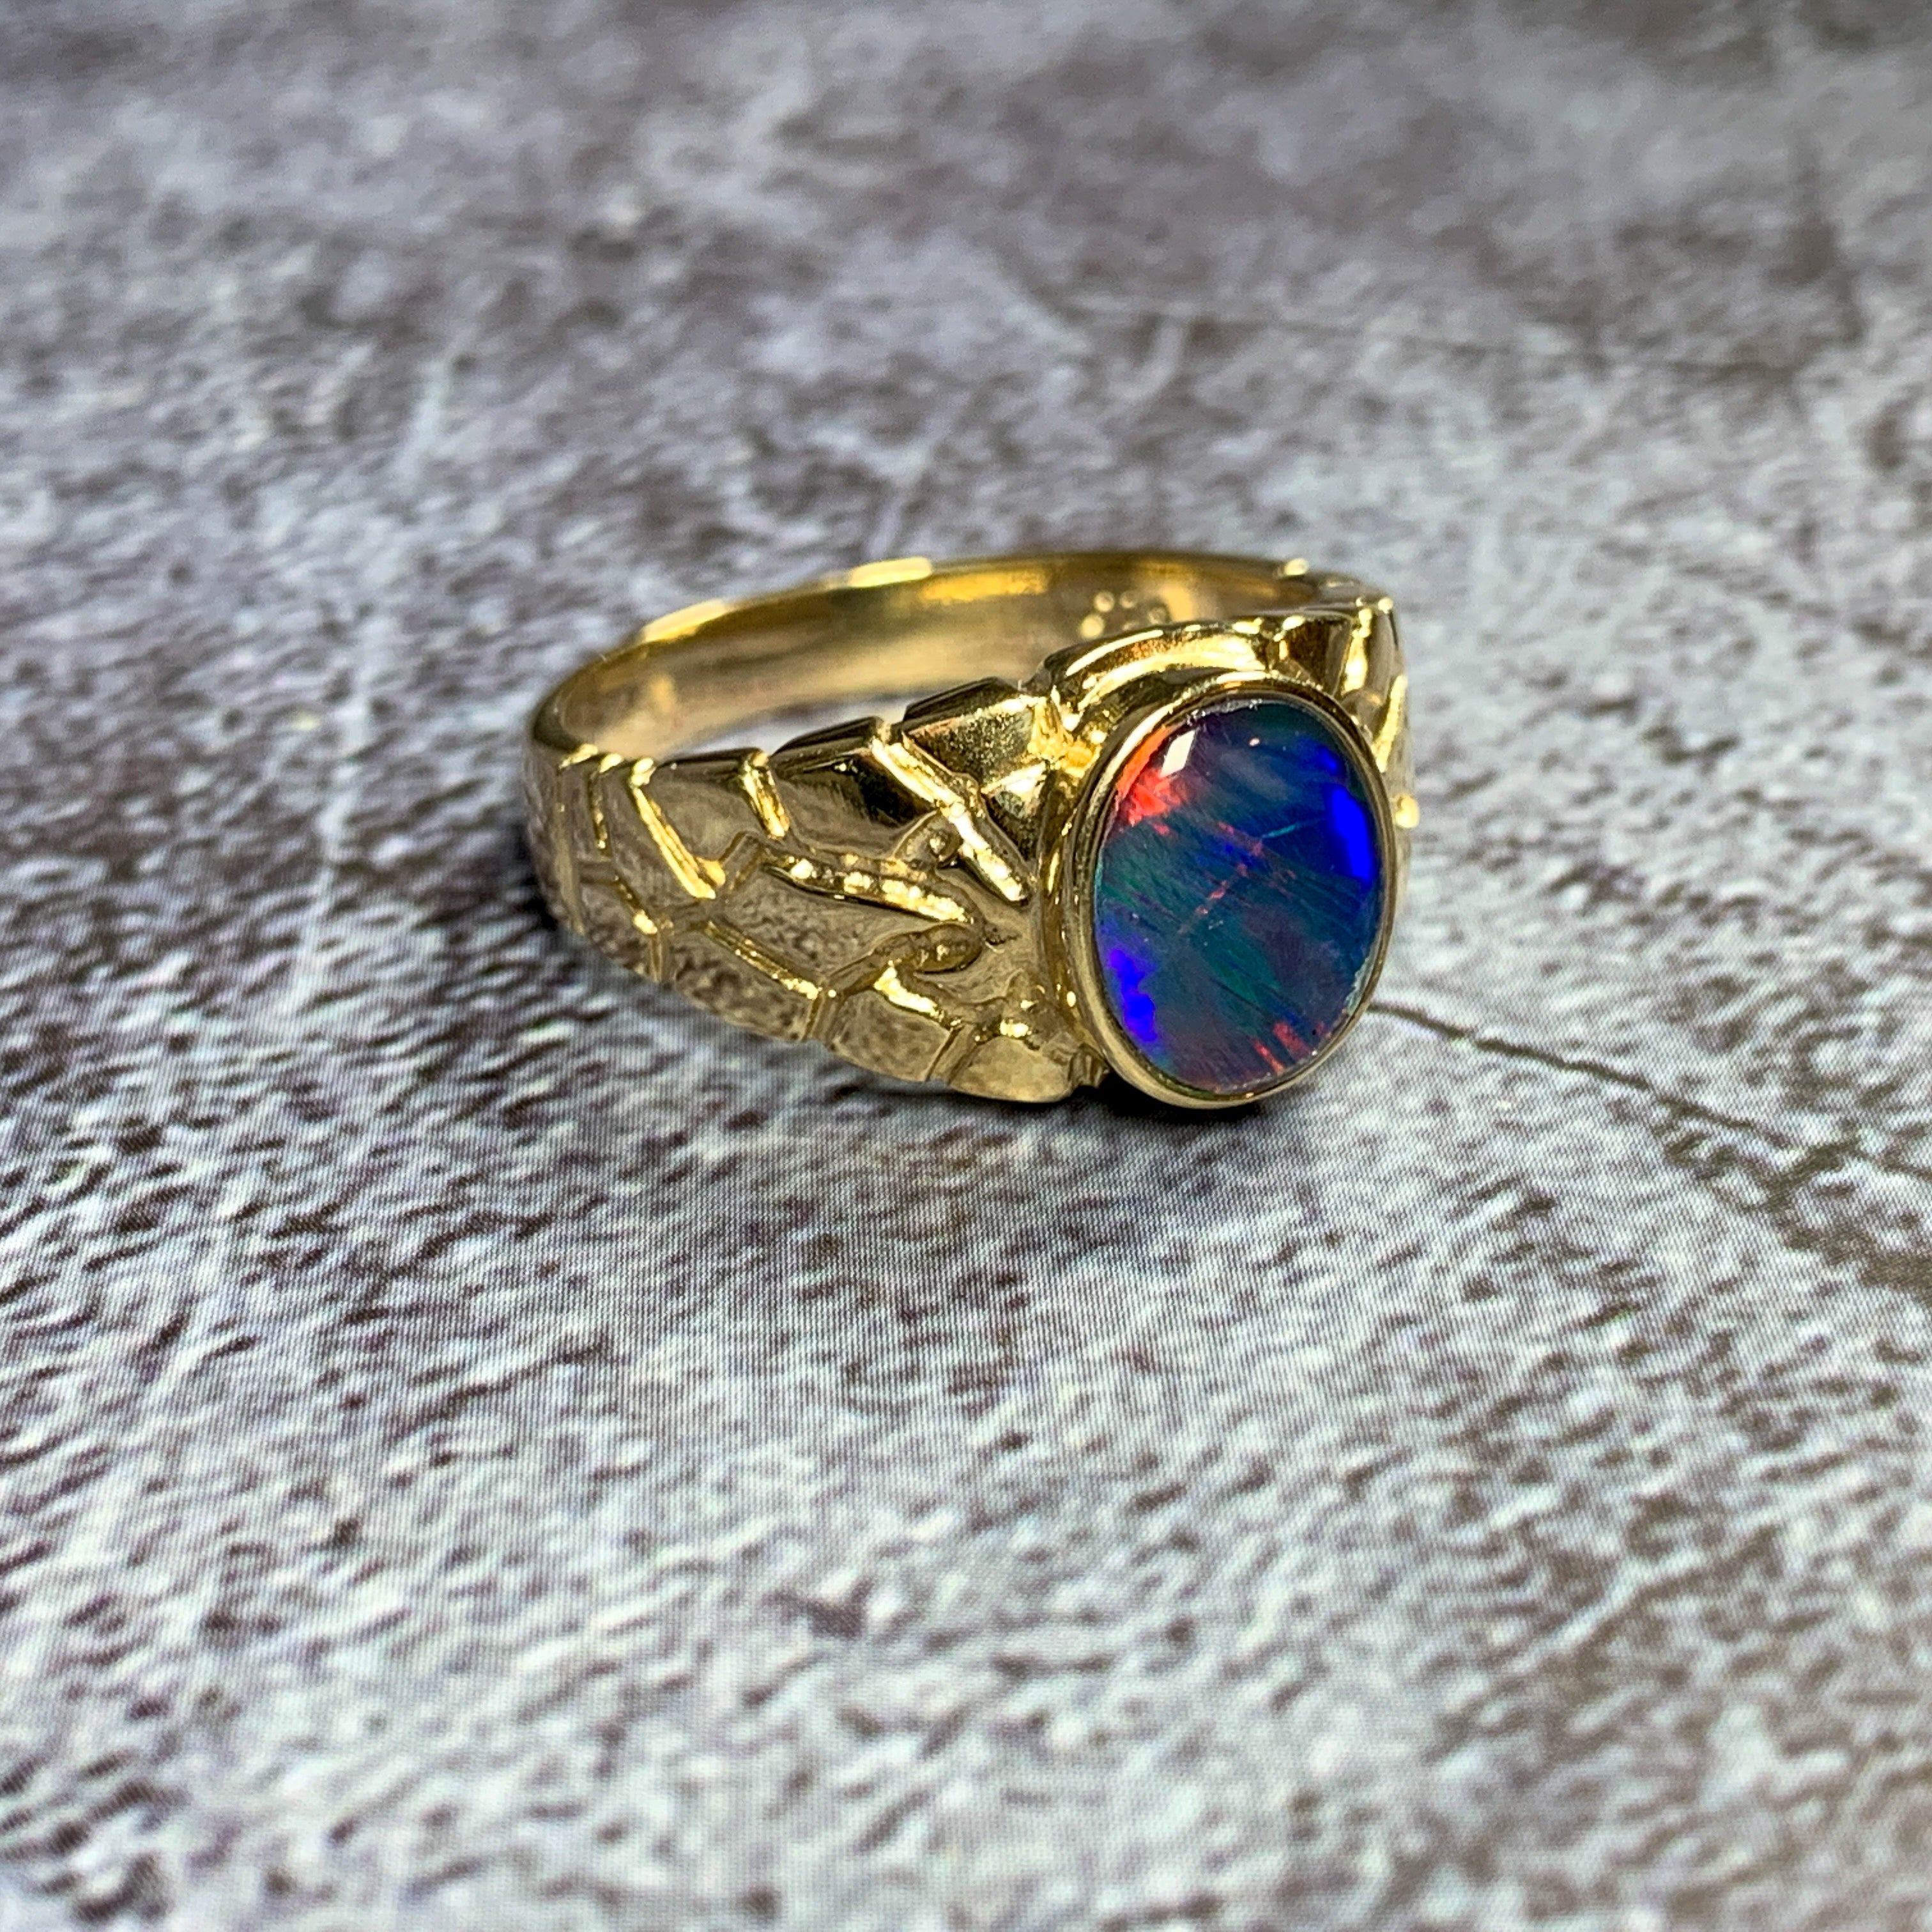 One 9kt Yellow Gold signet pattern ring set with one 10x8mm Opal triplet - Masterpiece Jewellery Opal & Gems Sydney Australia | Online Shop